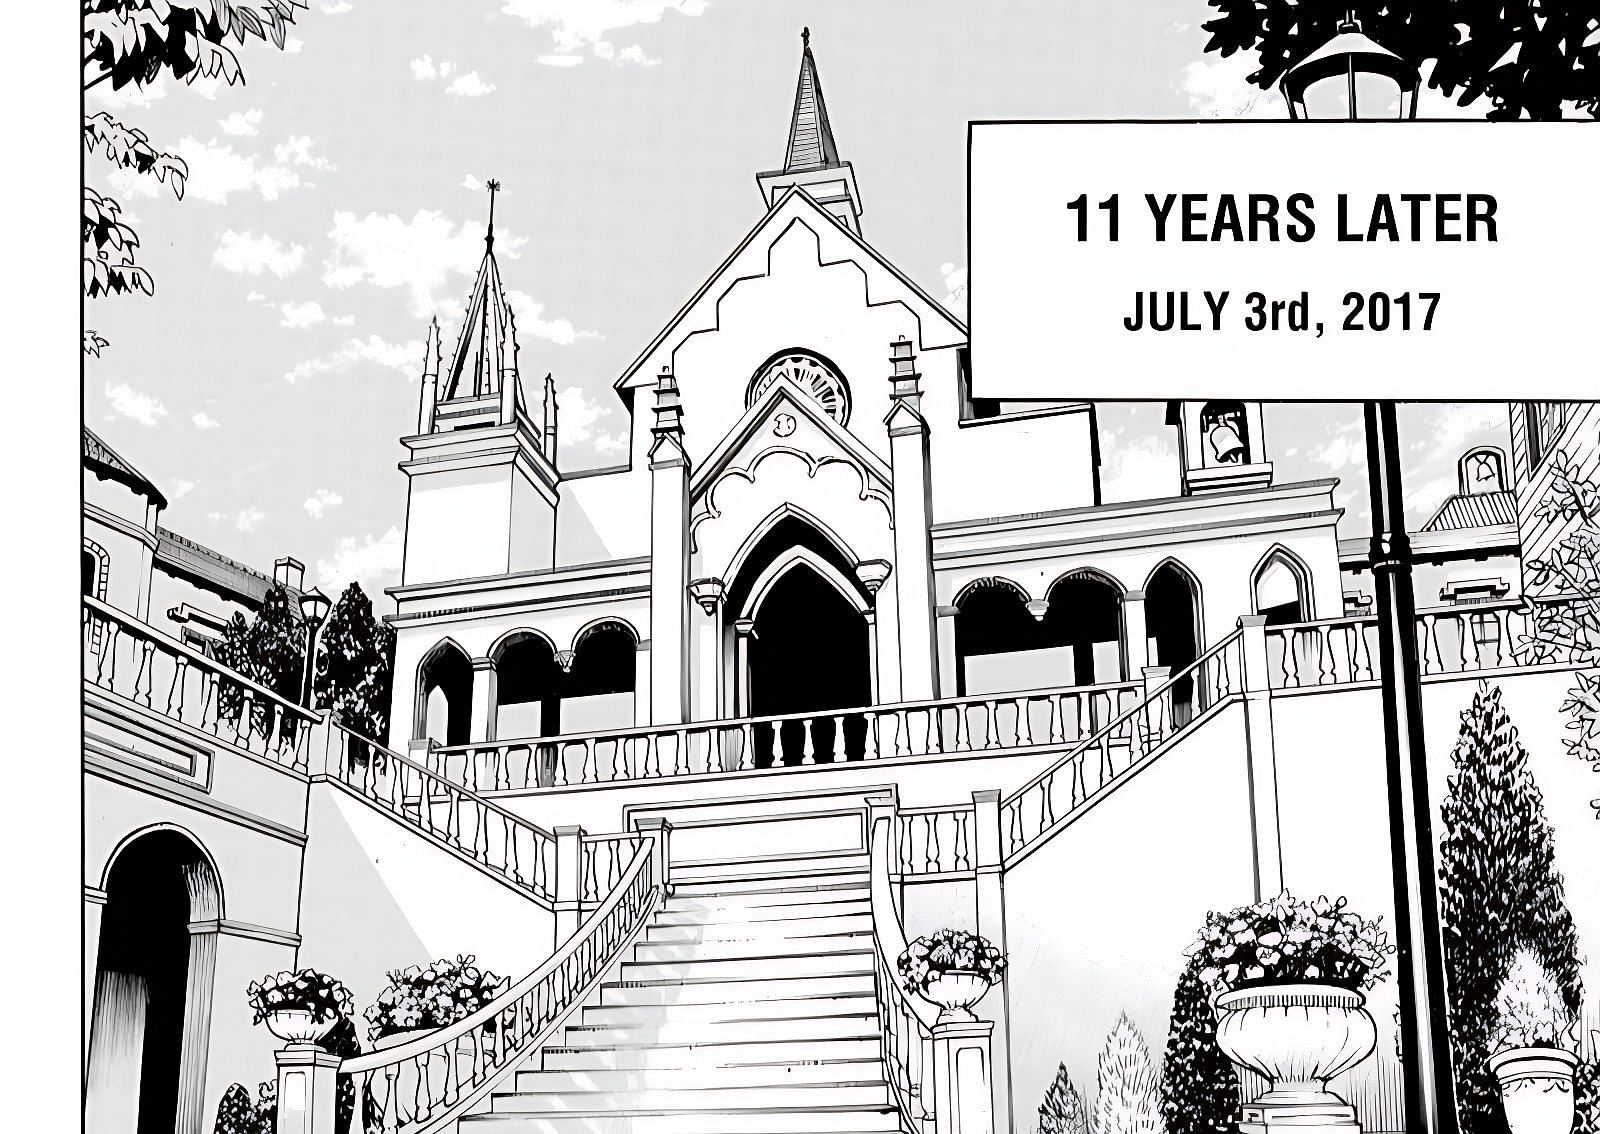 The church 11 years later (Image via Ken Wakui/Kodansha)